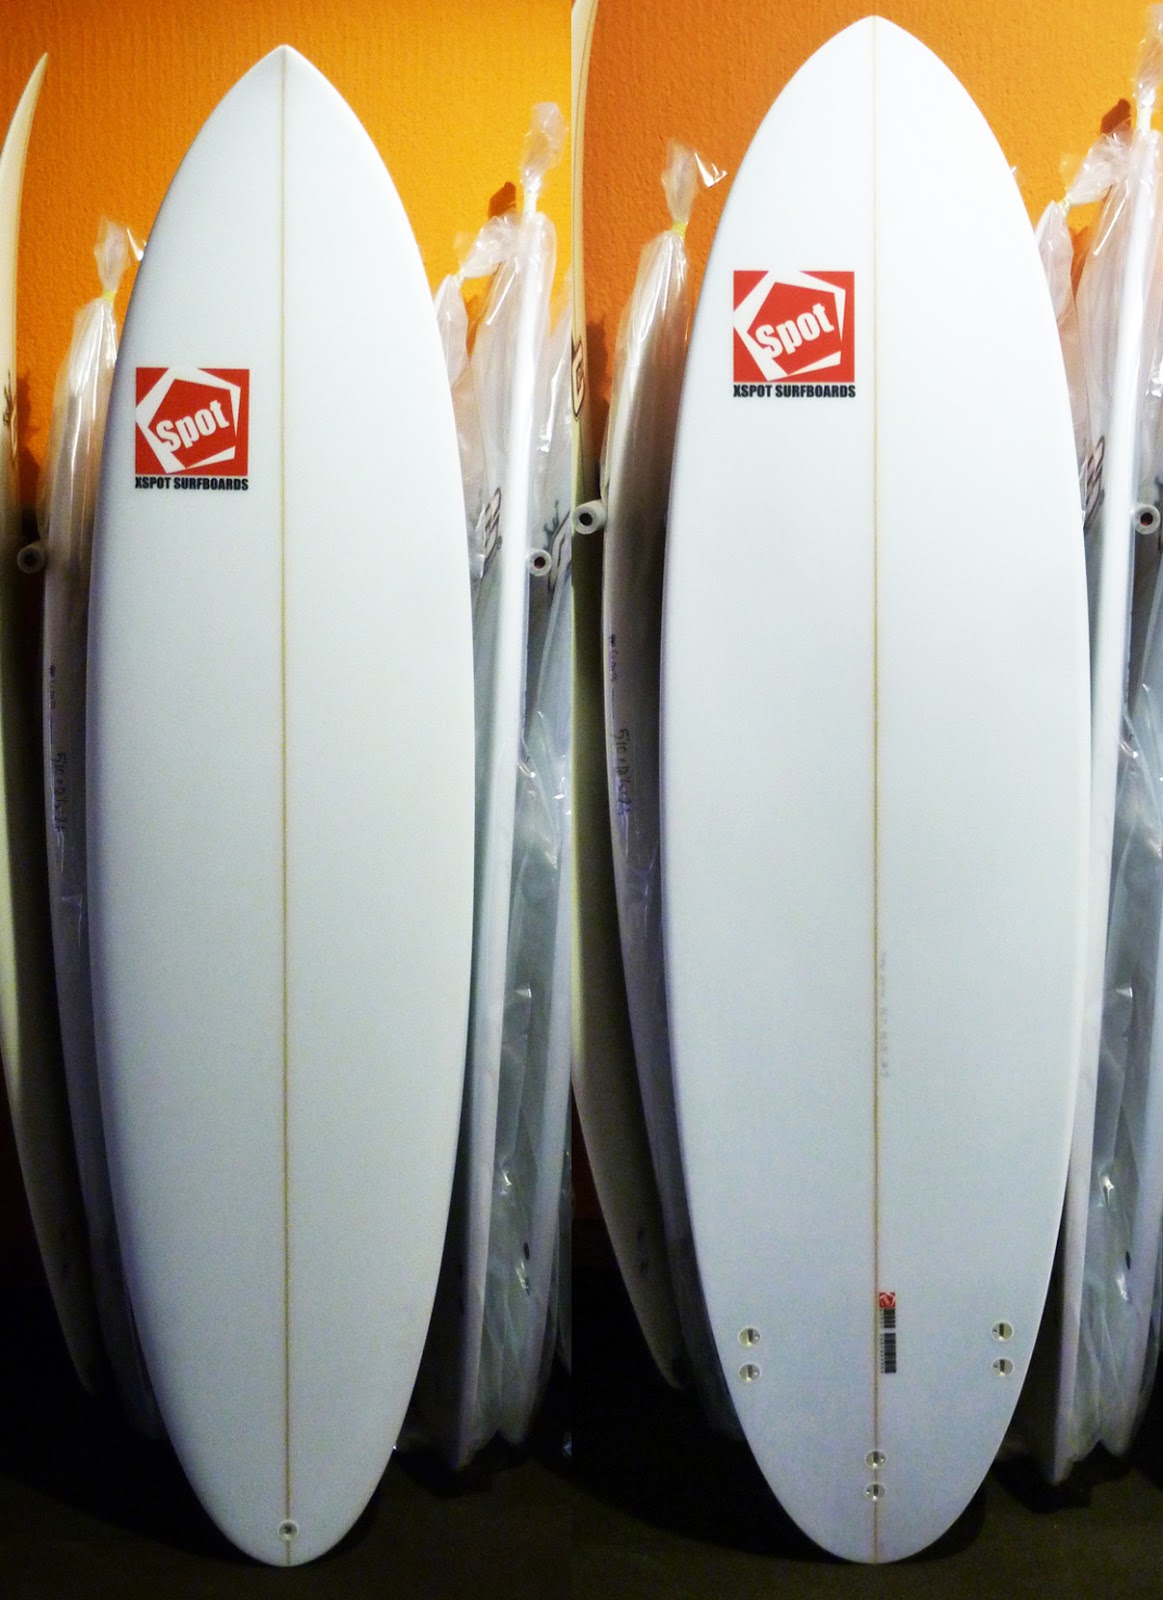 xspot surfboards: oferta primavera 2013